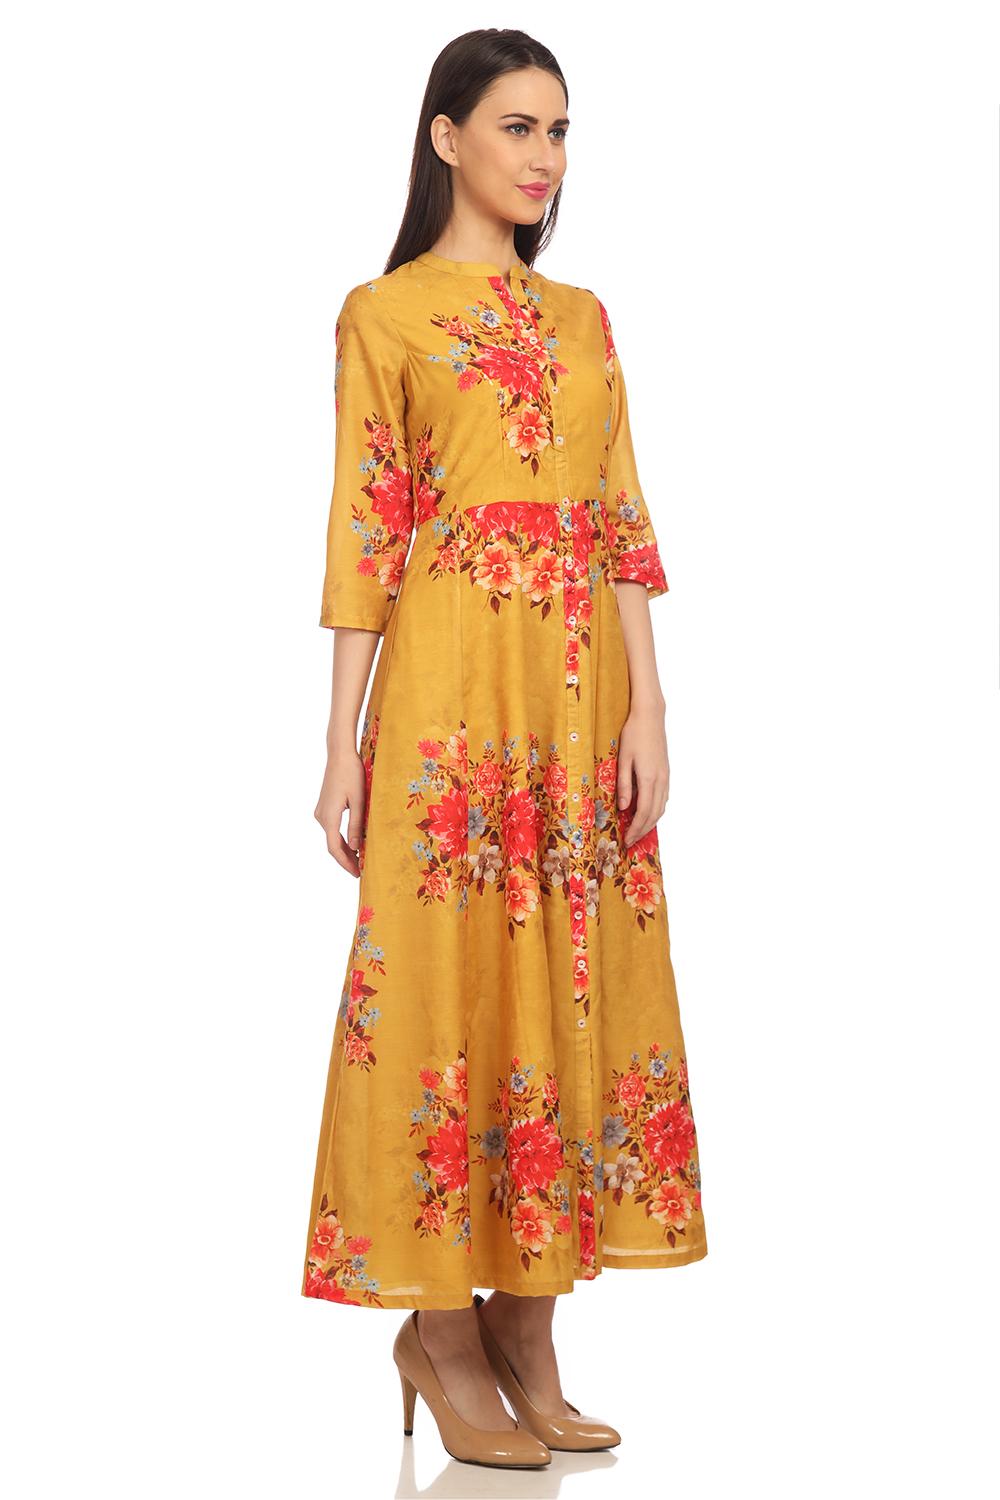 Buy online Yellow Flared Art Silk Dress for women at best price at biba ...